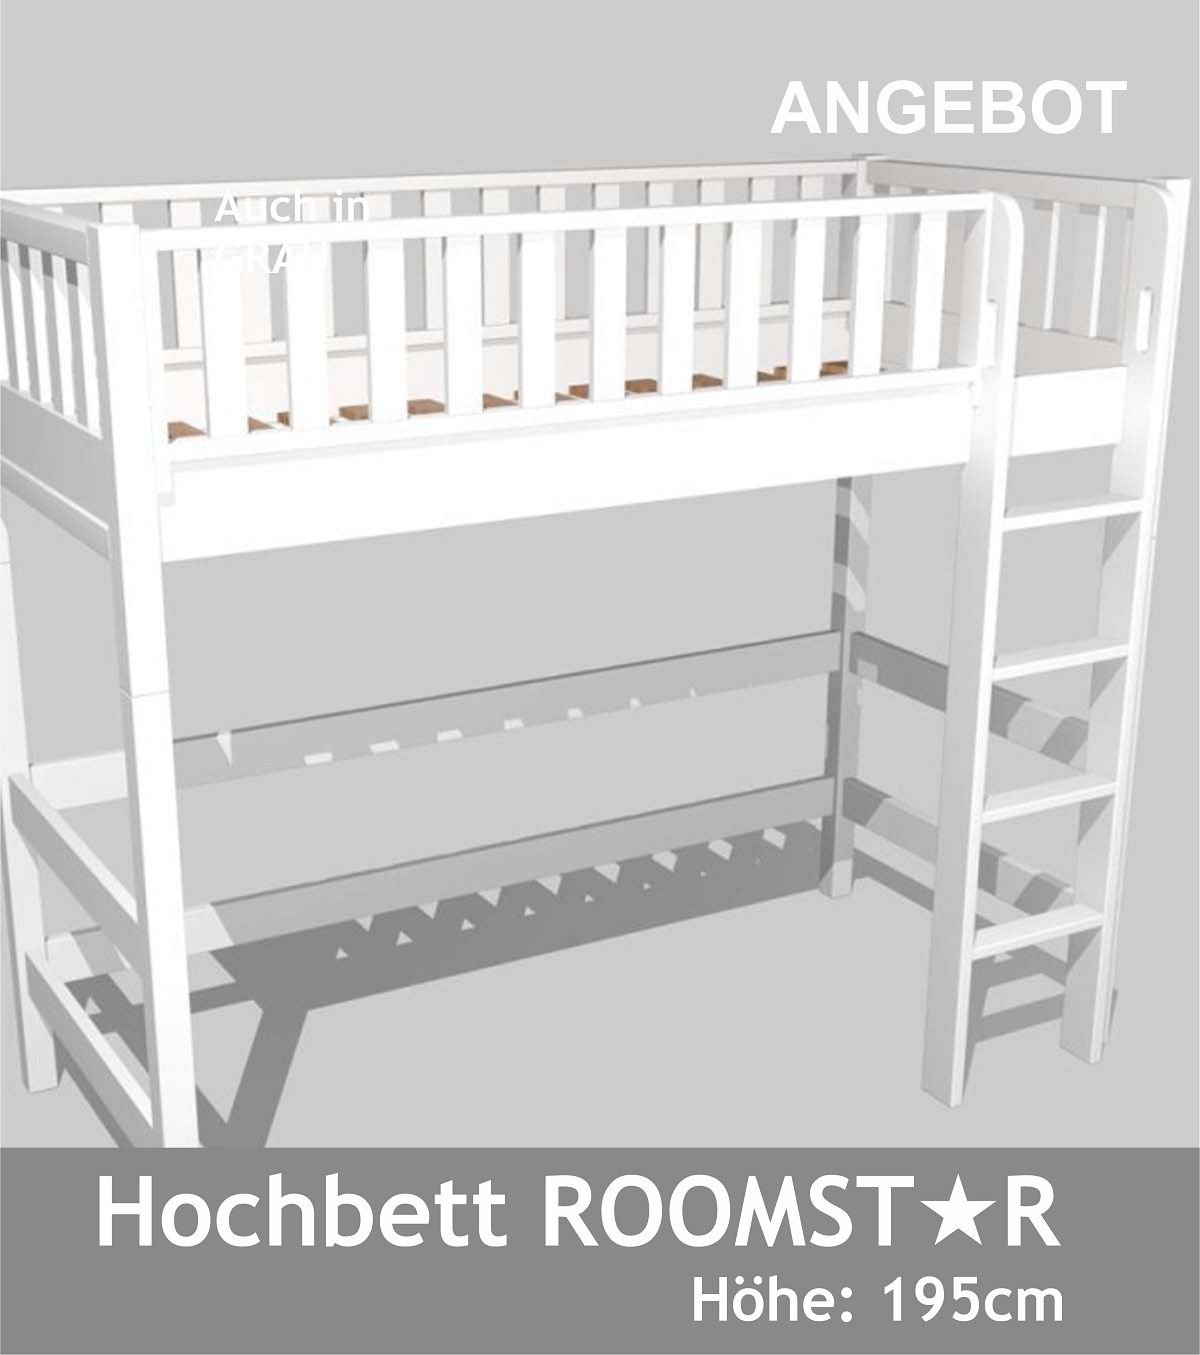 Hochbett Roomstar 195cm Multifunktional und umbaubar